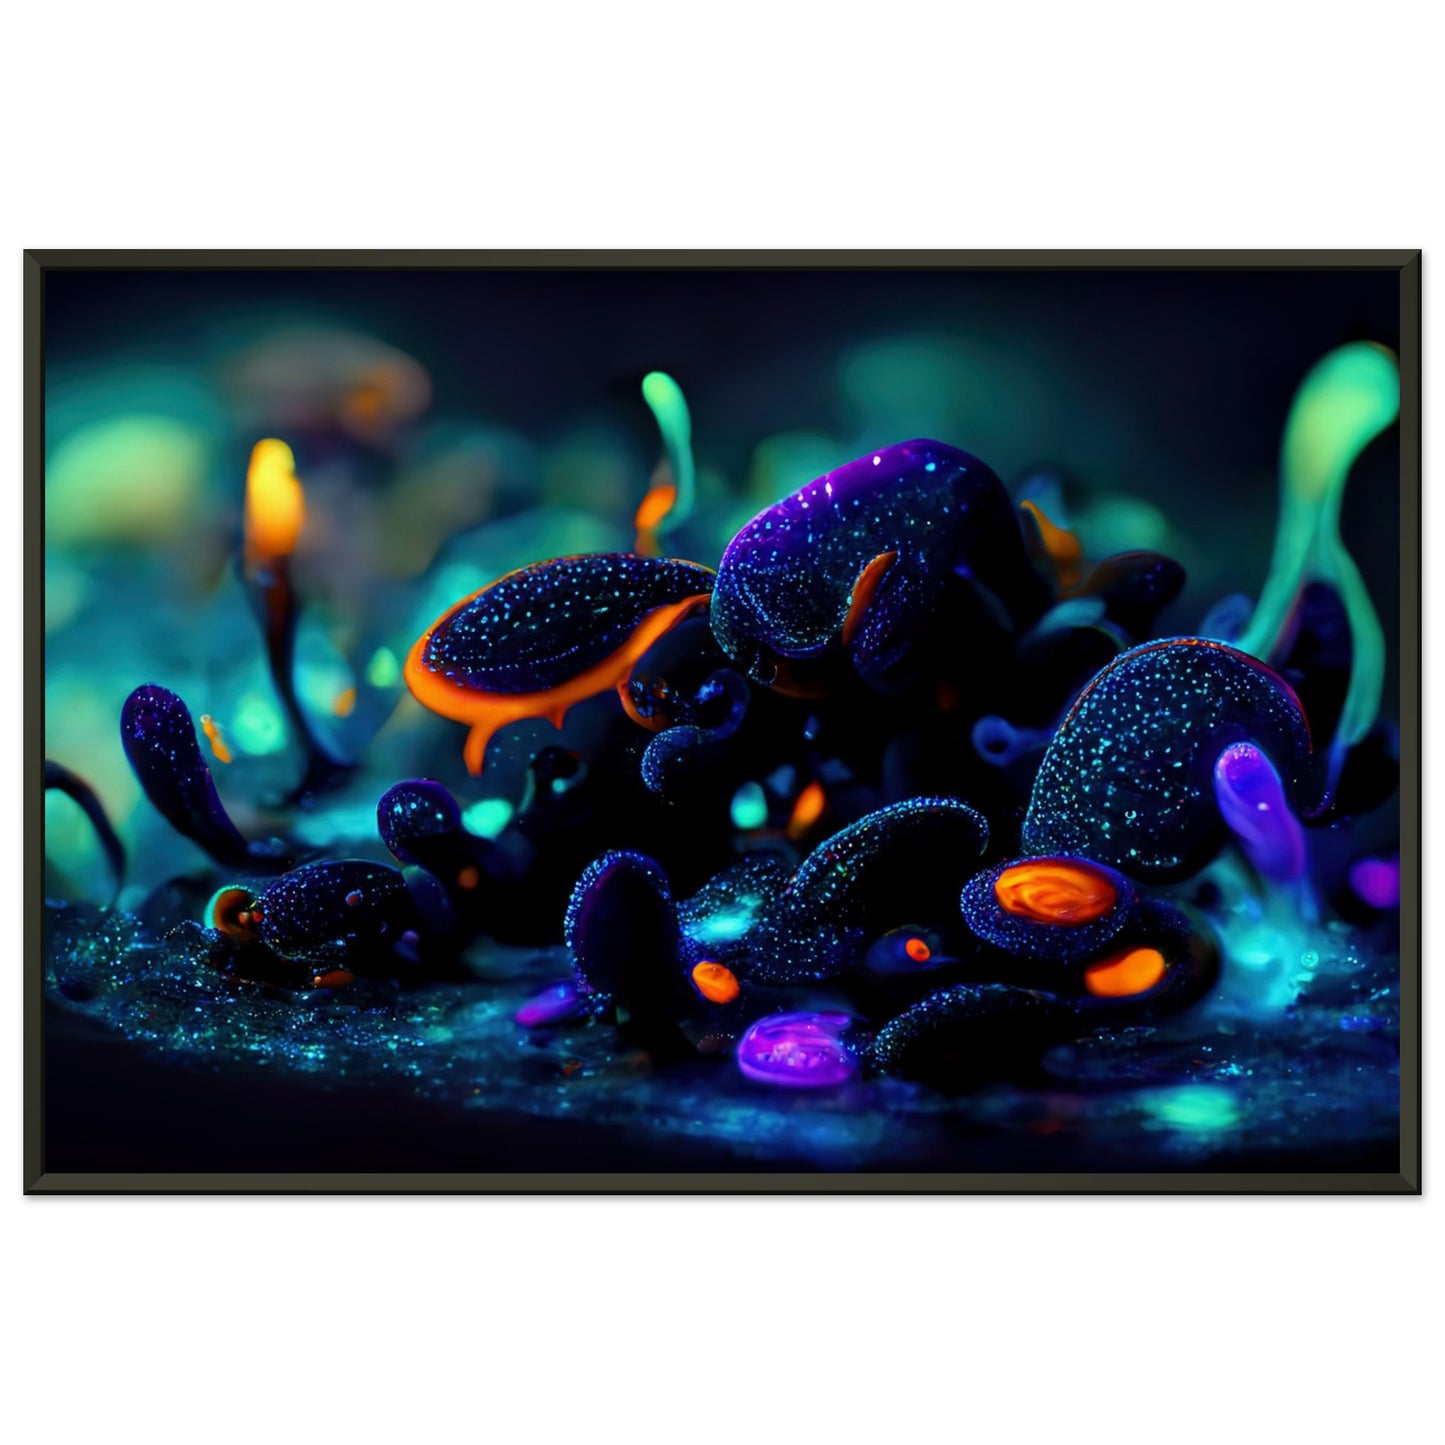 Bioluminescence plants